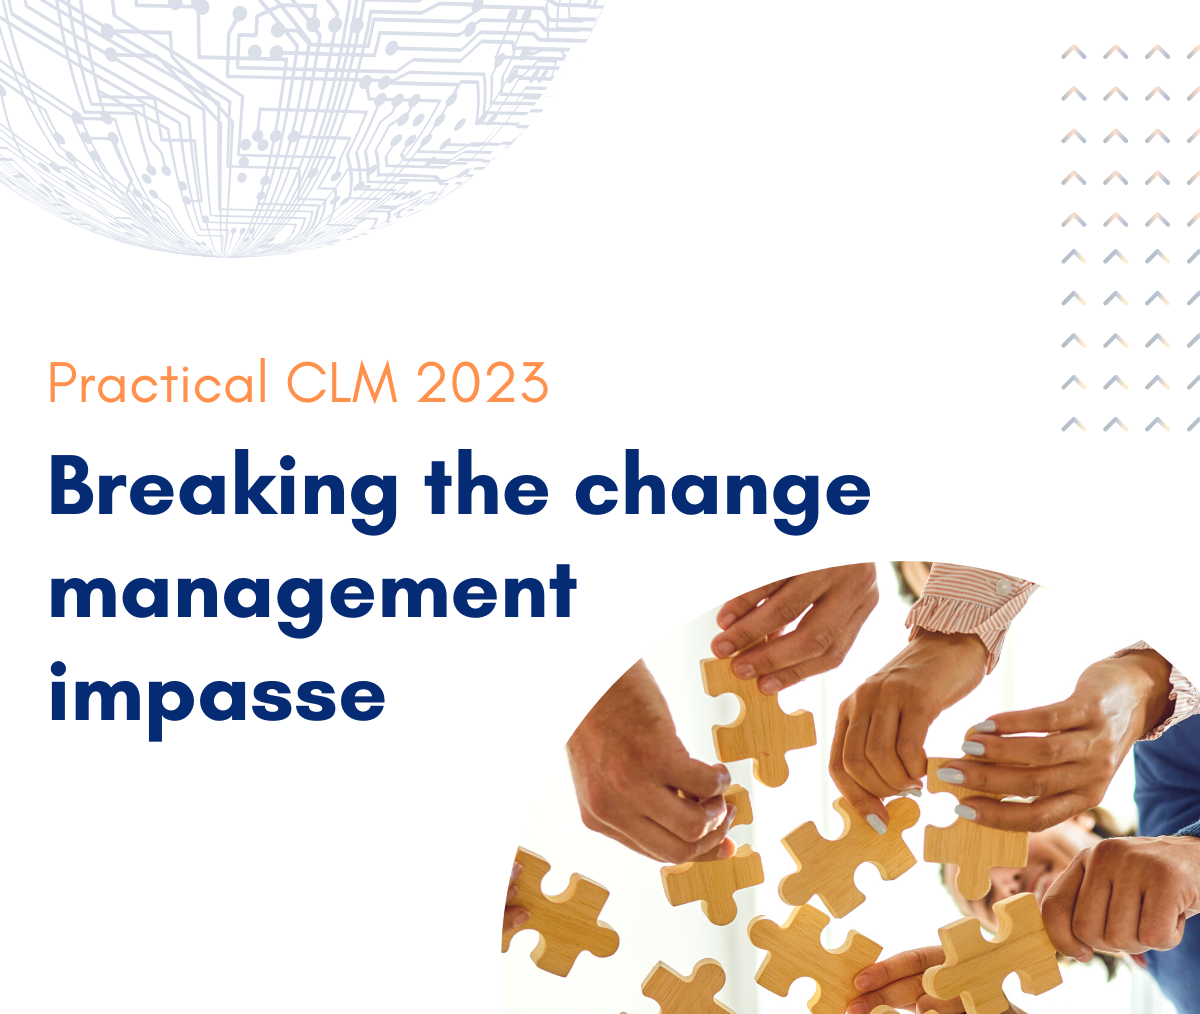 CLM implementation